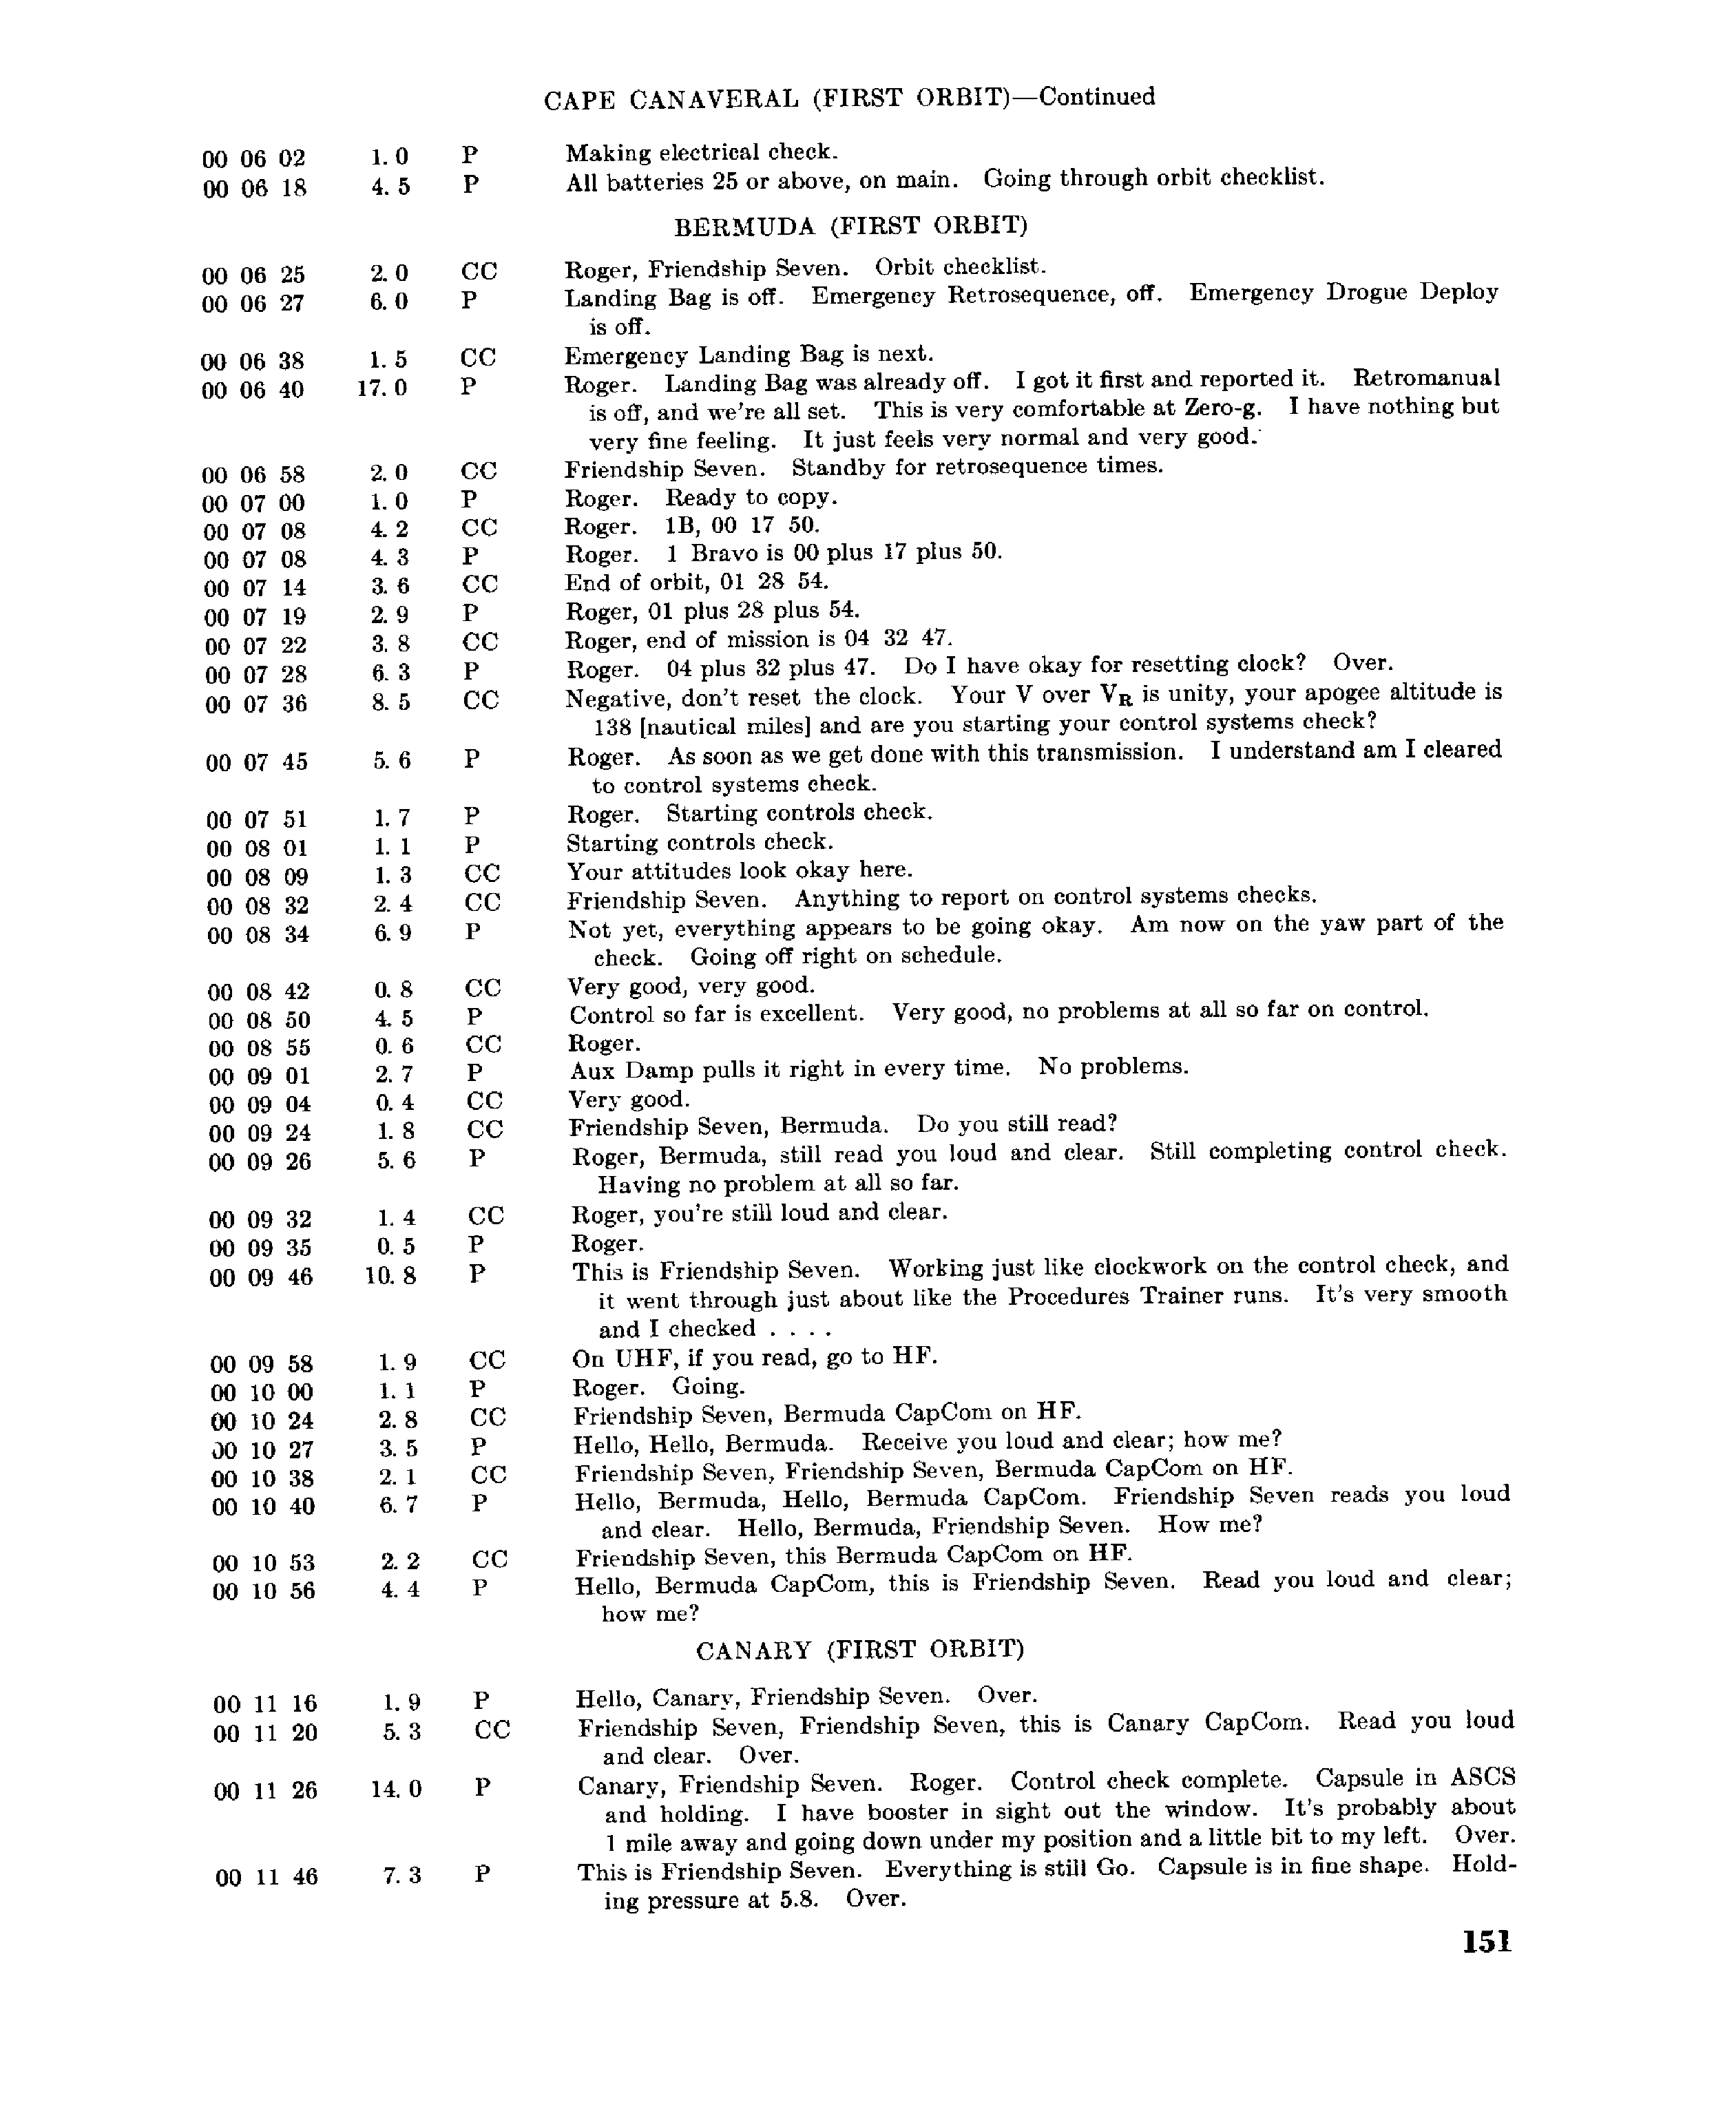 Page 150 of Mercury 6’s original transcript